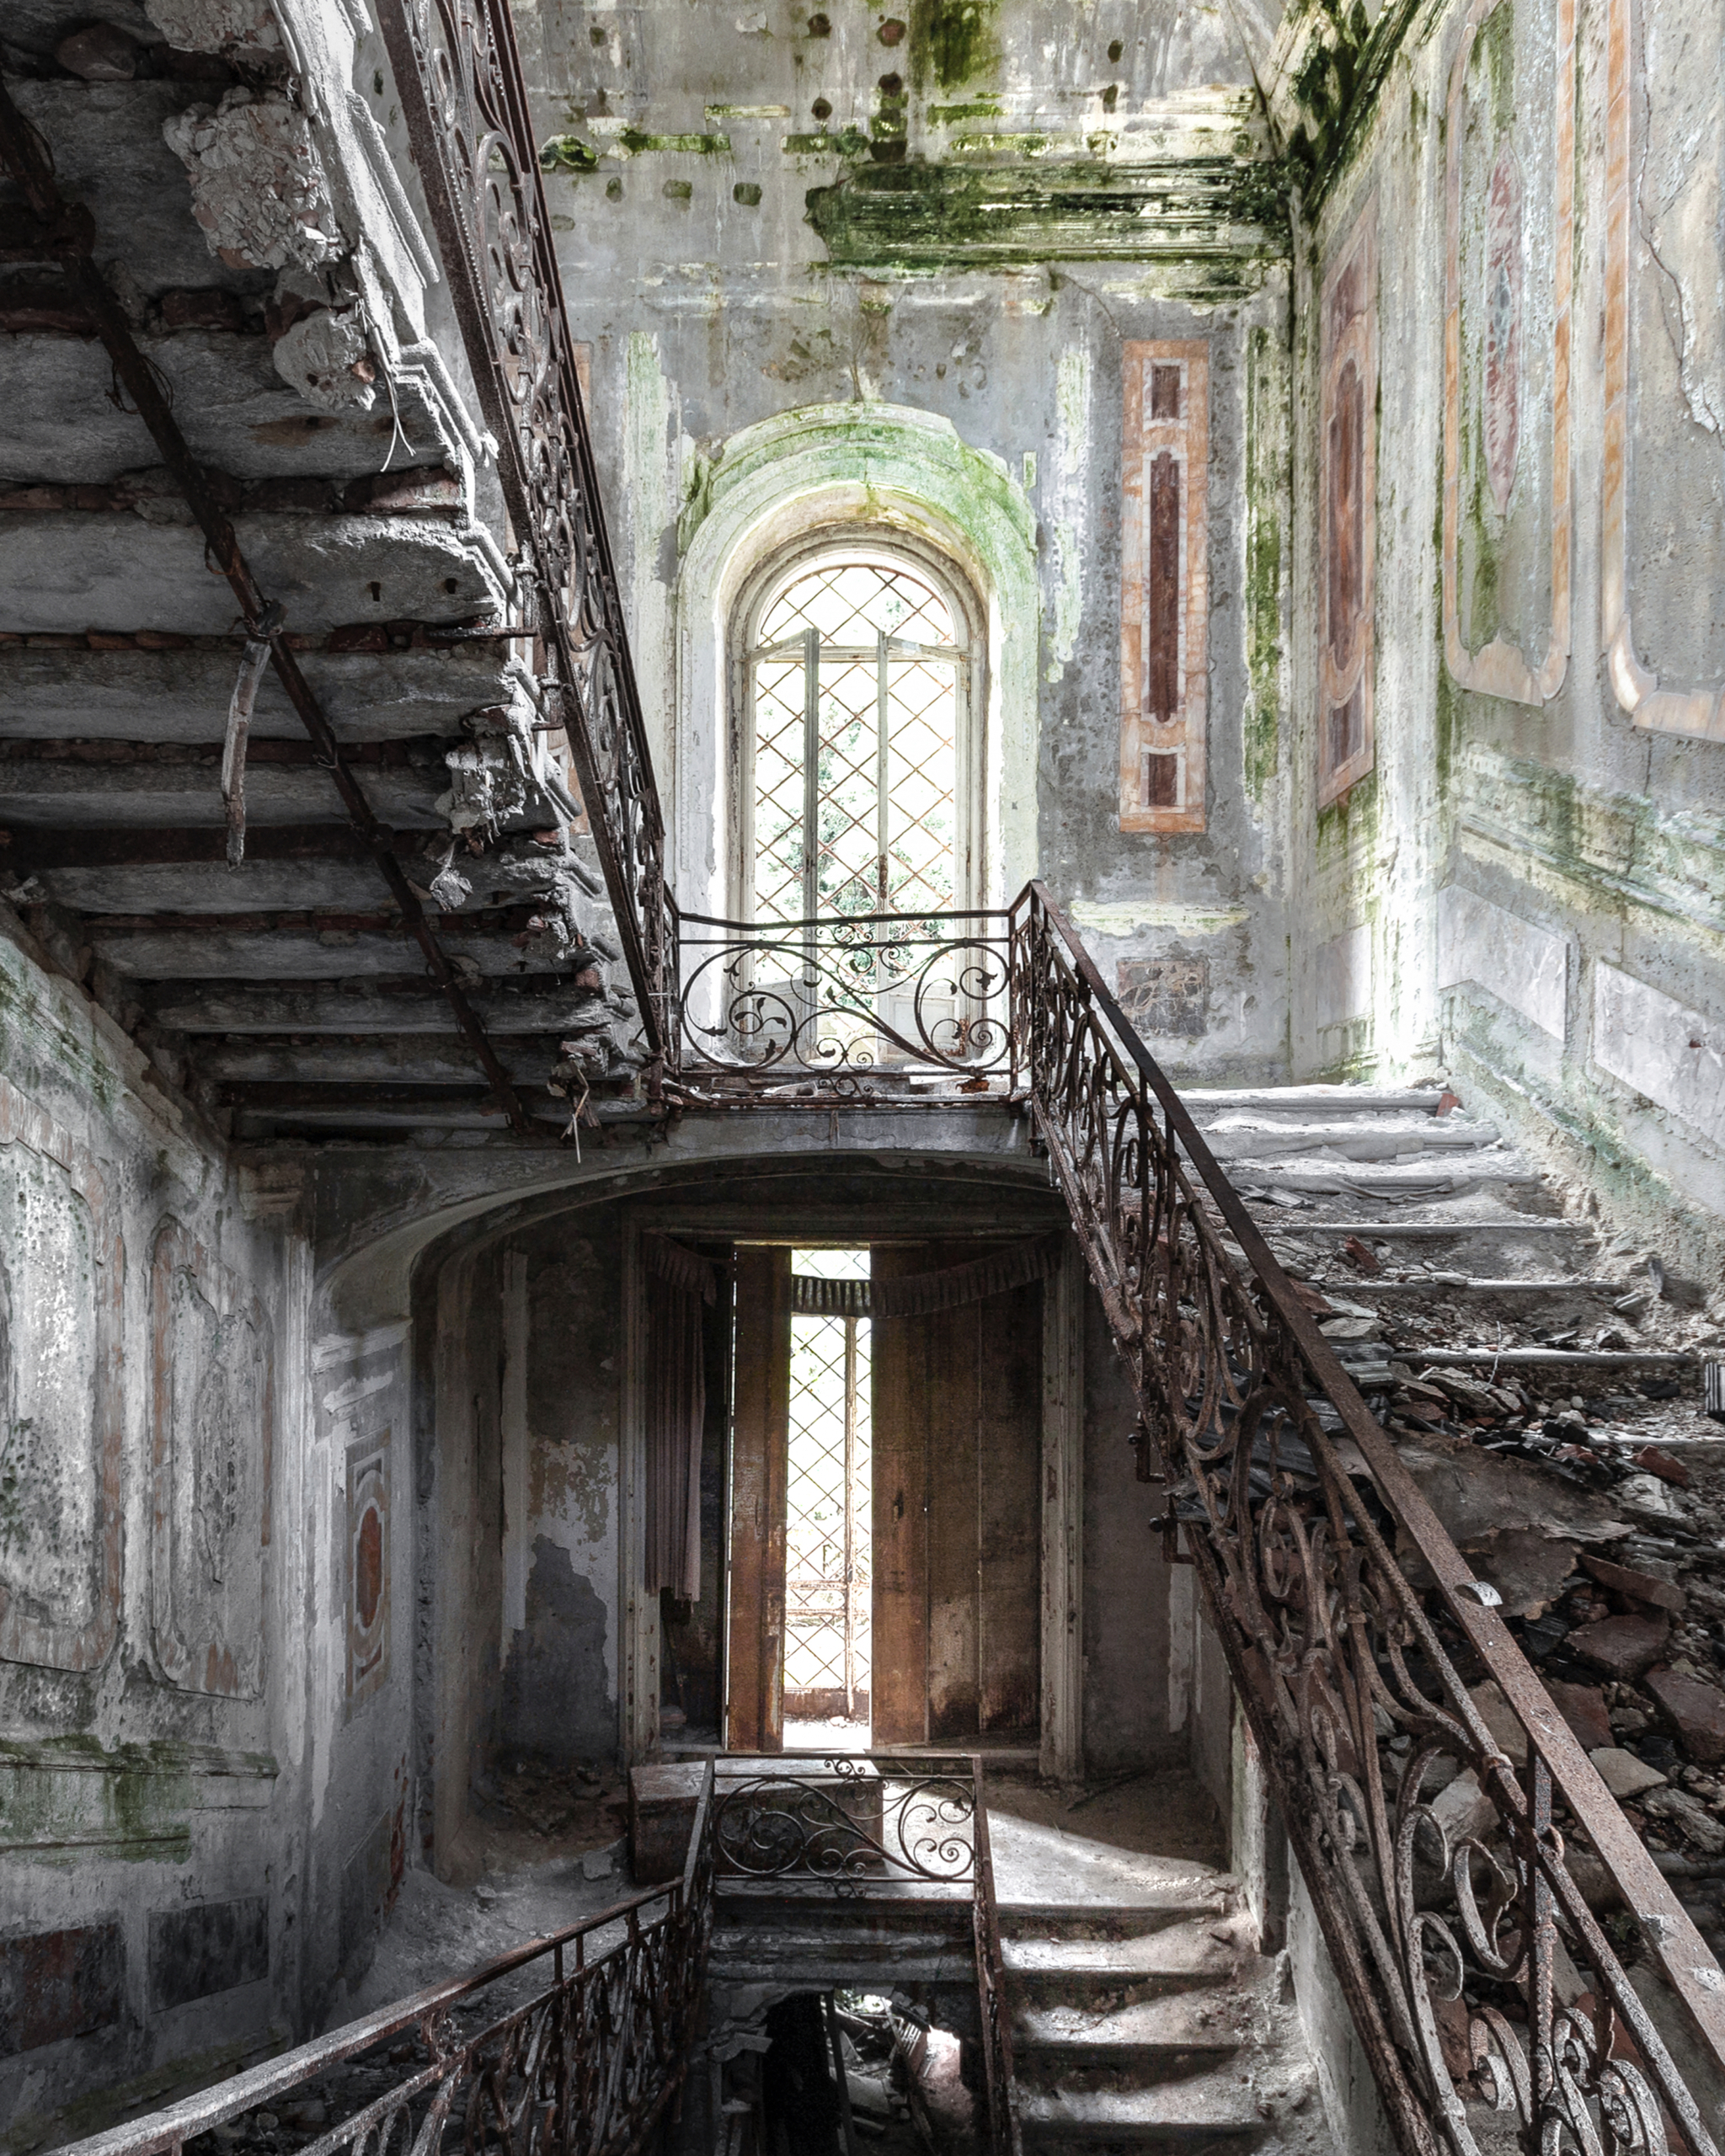 Lady of the Lake - Abandoned Villa near Lago Maggiore, Italy